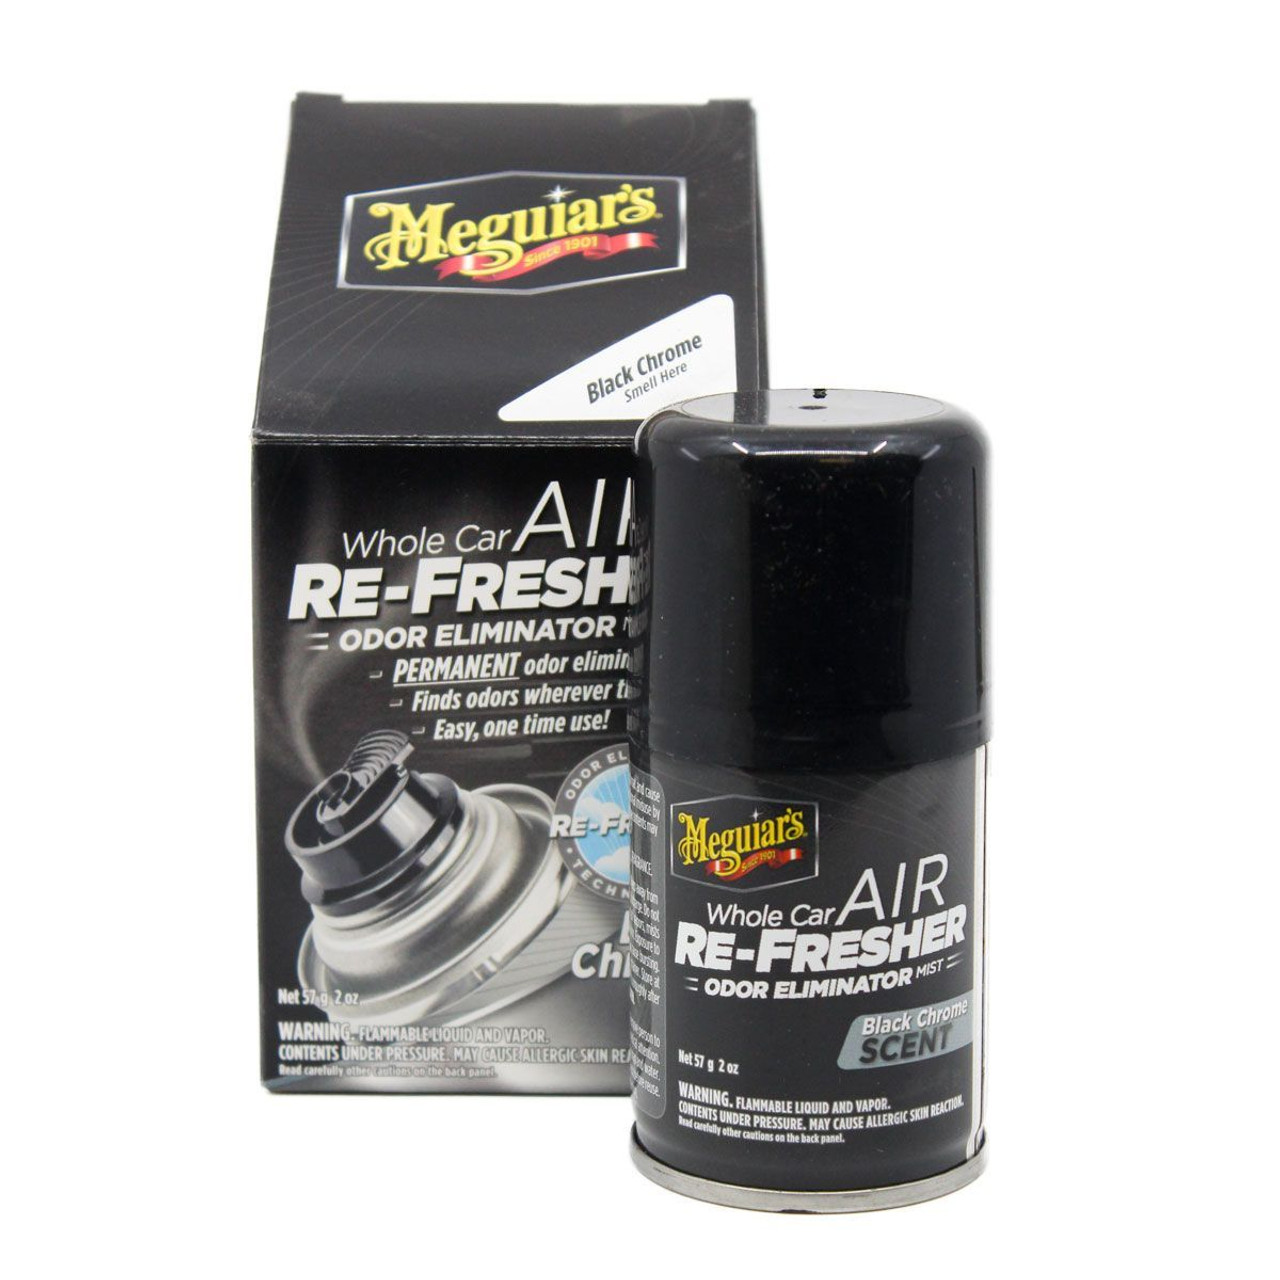 Meguiars Air Re-Fresher Odor eliminator- Sumemr Breeze Scent